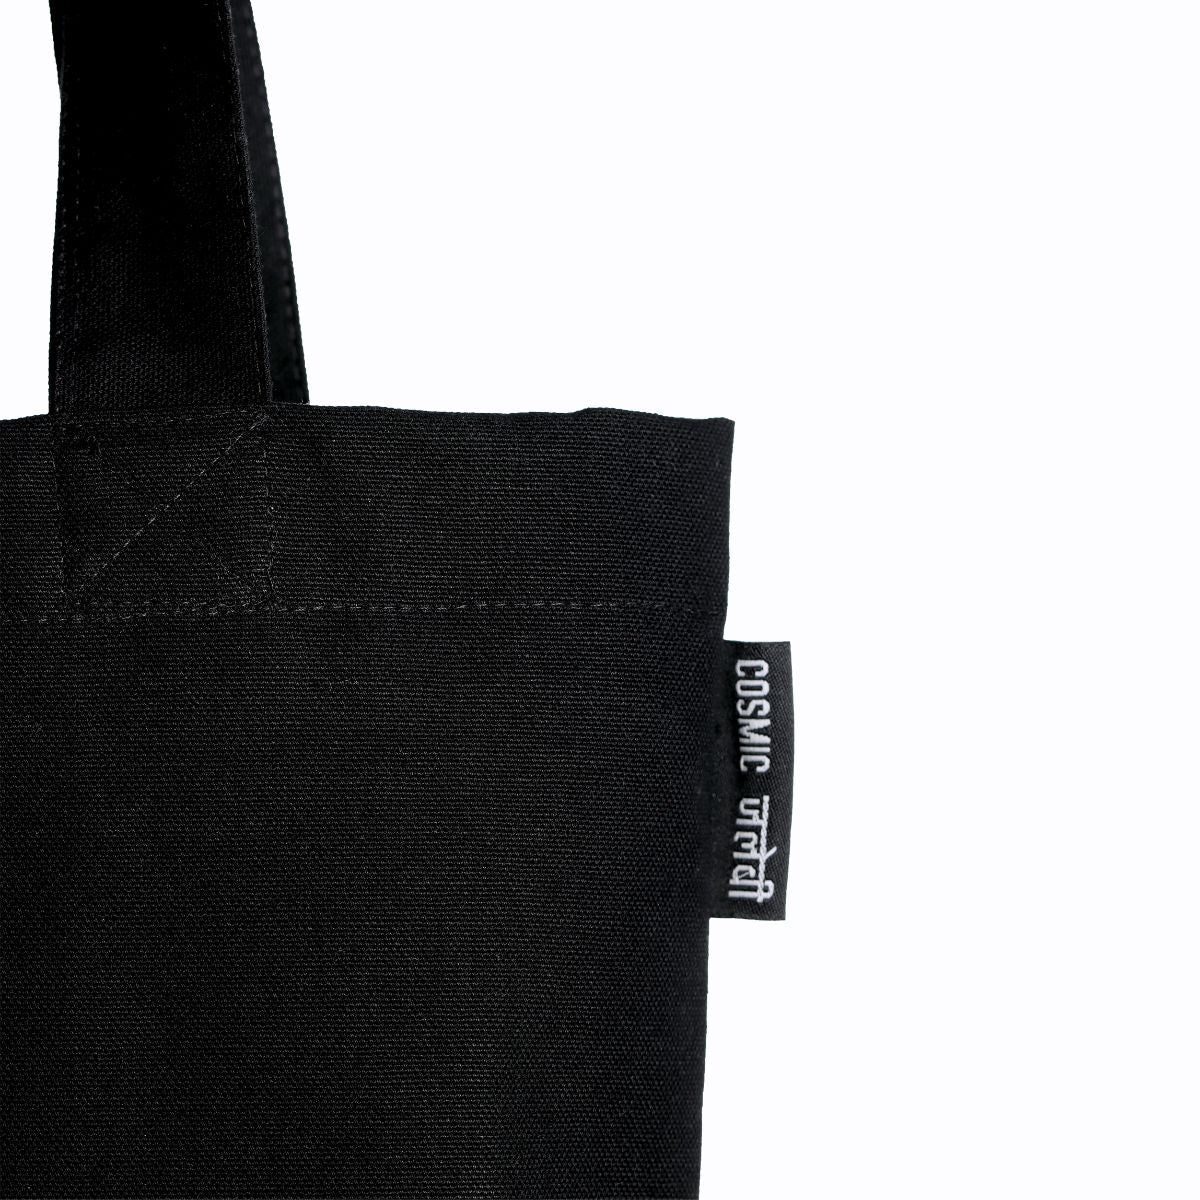 It’s Giving Cunt | Black Zipper Tote Bag